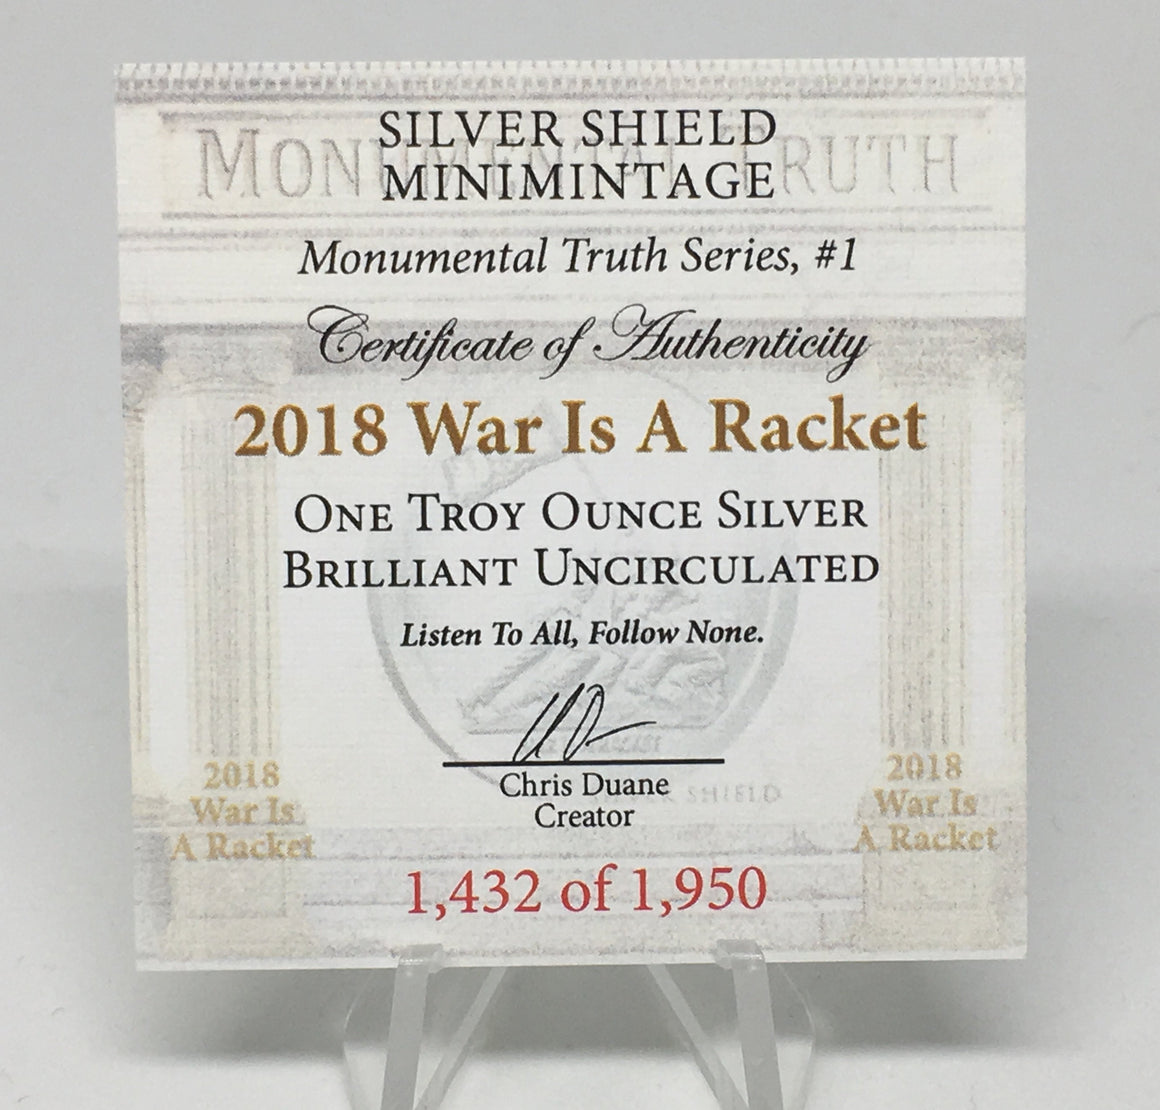 2018 War is Racket by Silver Shield, Mini Mintage - BU 1 oz .999 Silver Round